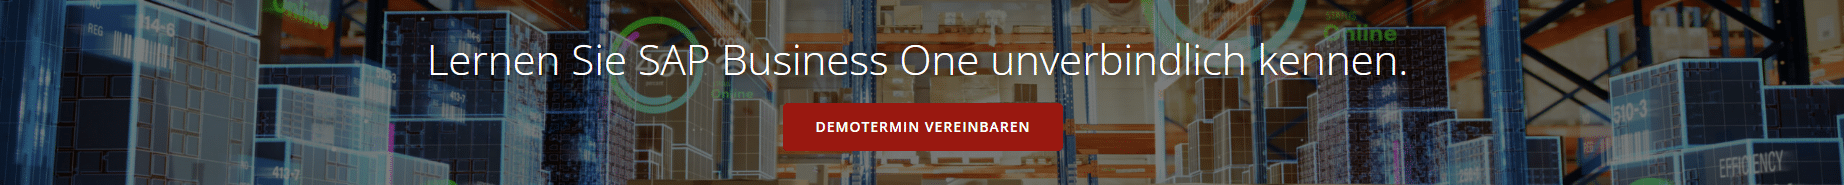 Banner Demotermin vereinbaren Wrede GmbH SAP Business One Partner